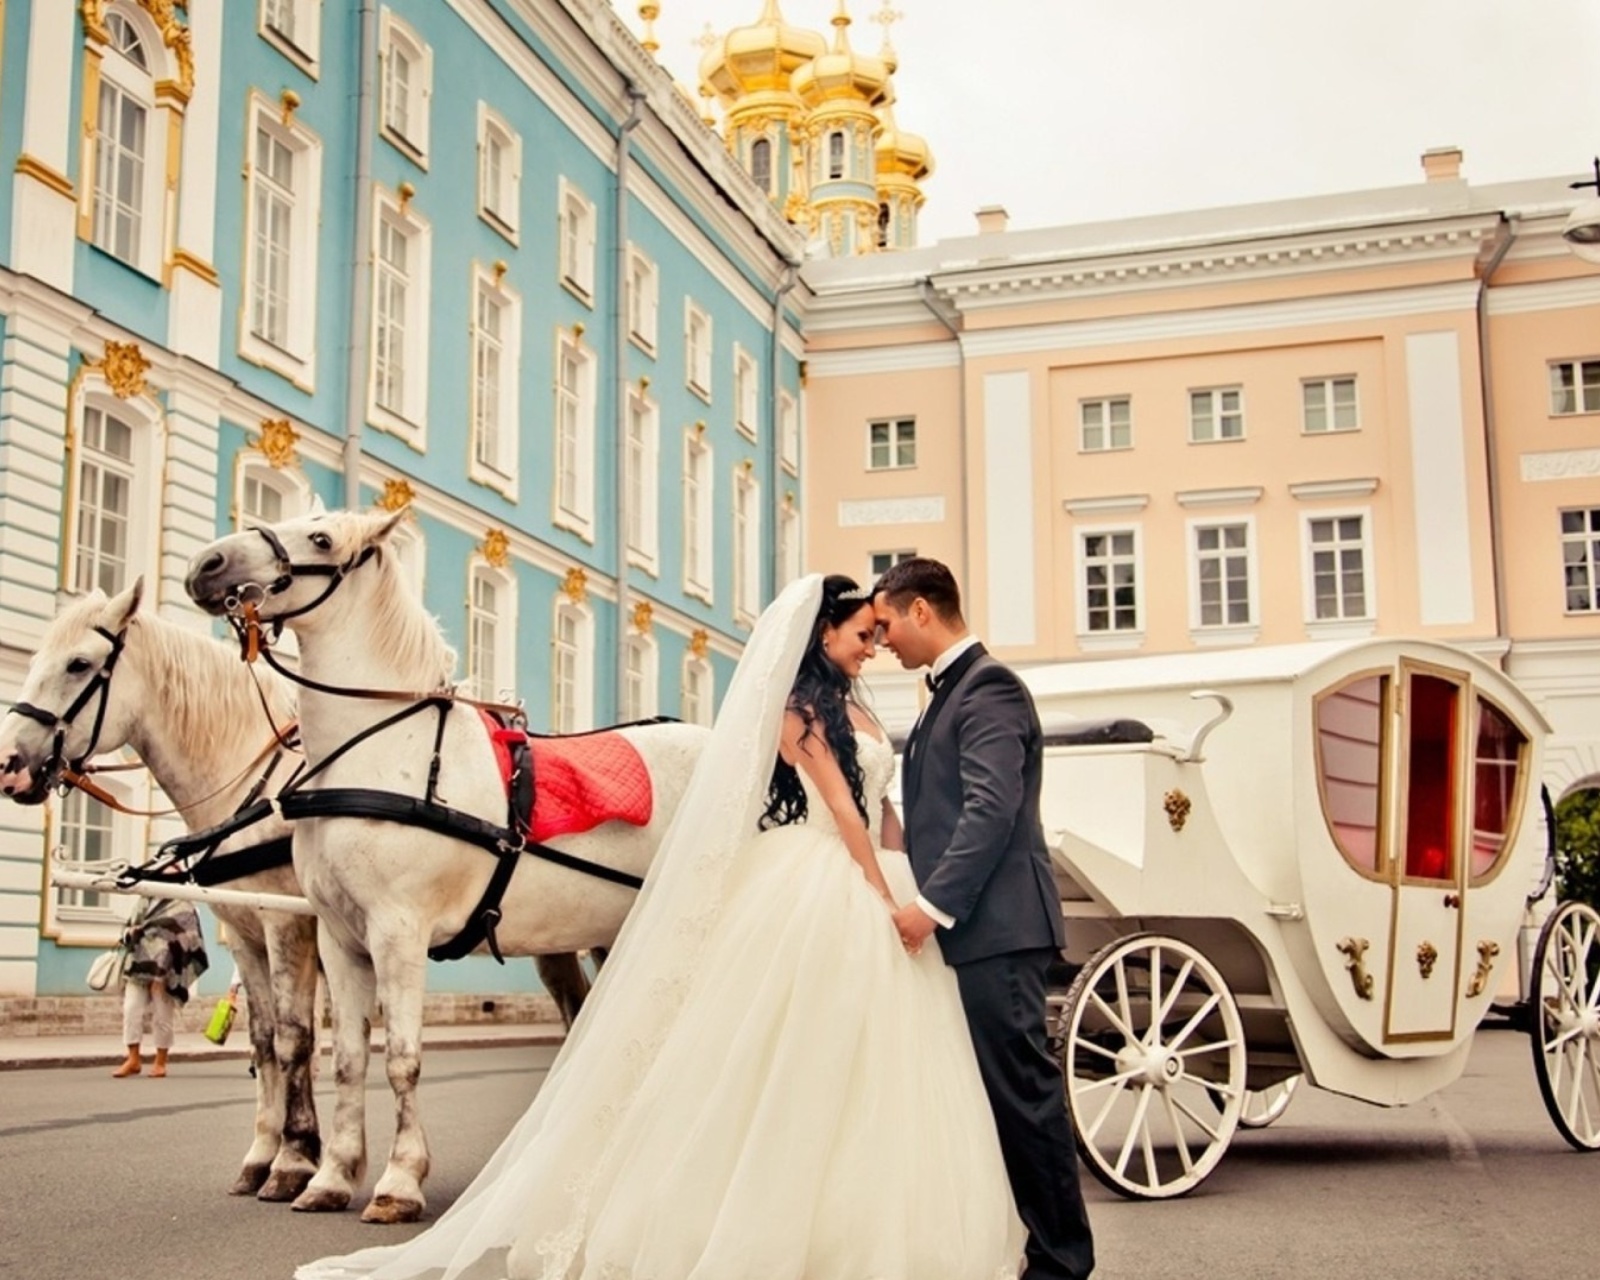 Wedding in carriage screenshot #1 1600x1280